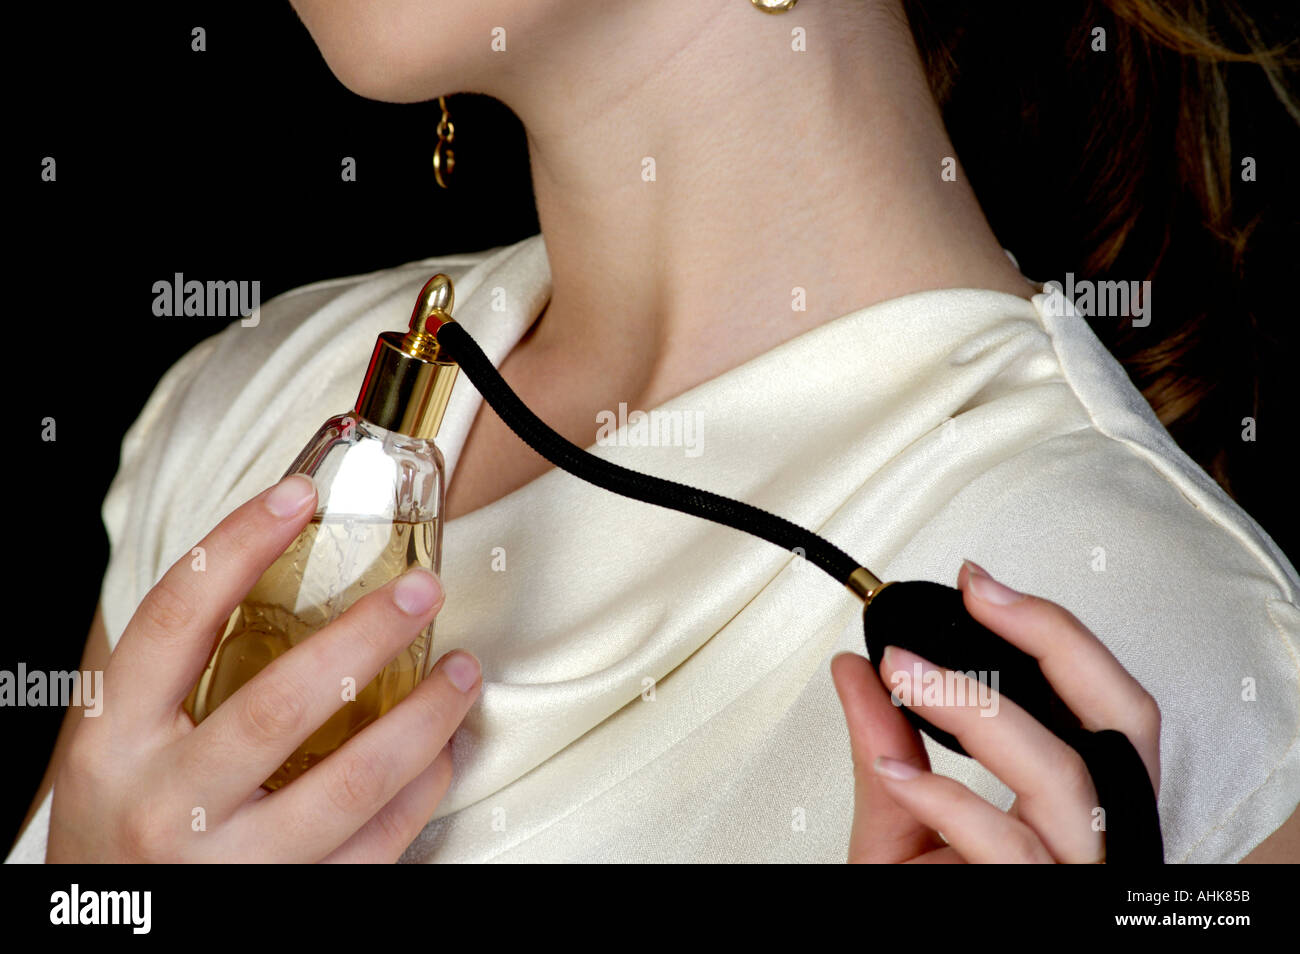 Woman applying perfume Stock Photo